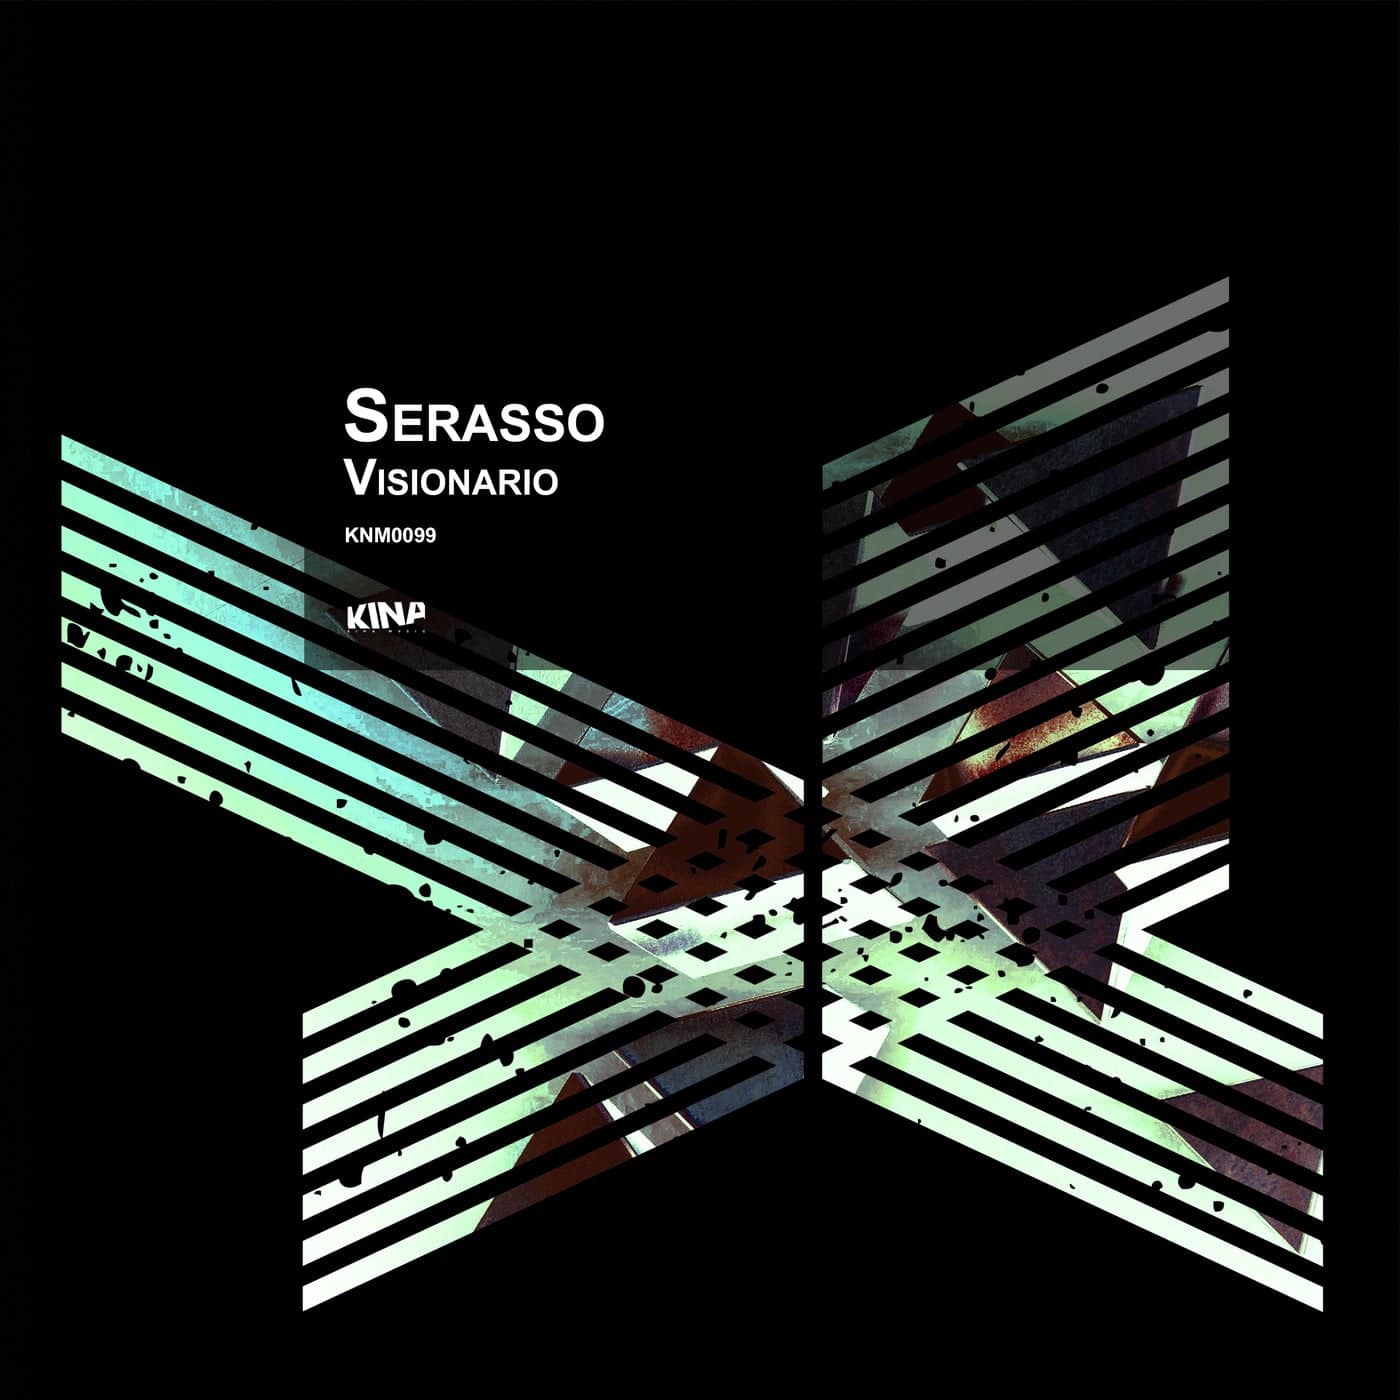 Download Serasso - Visionario on Electrobuzz